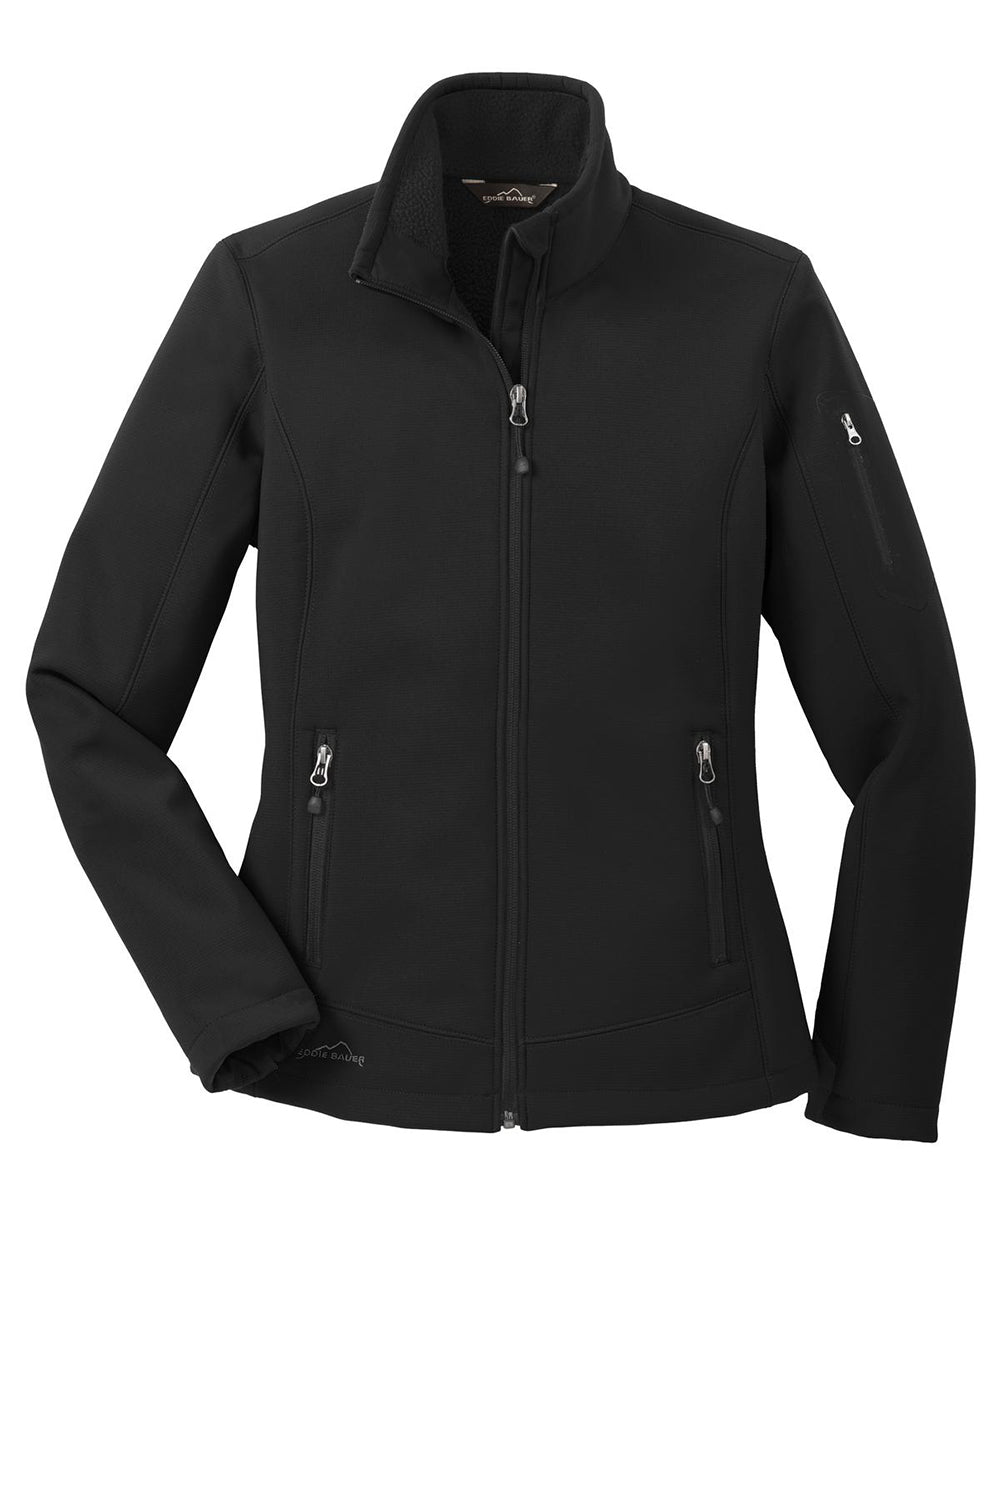 Eddie Bauer EB535 Womens Rugged Water Resistant Full Zip Jacket Black Flat Front